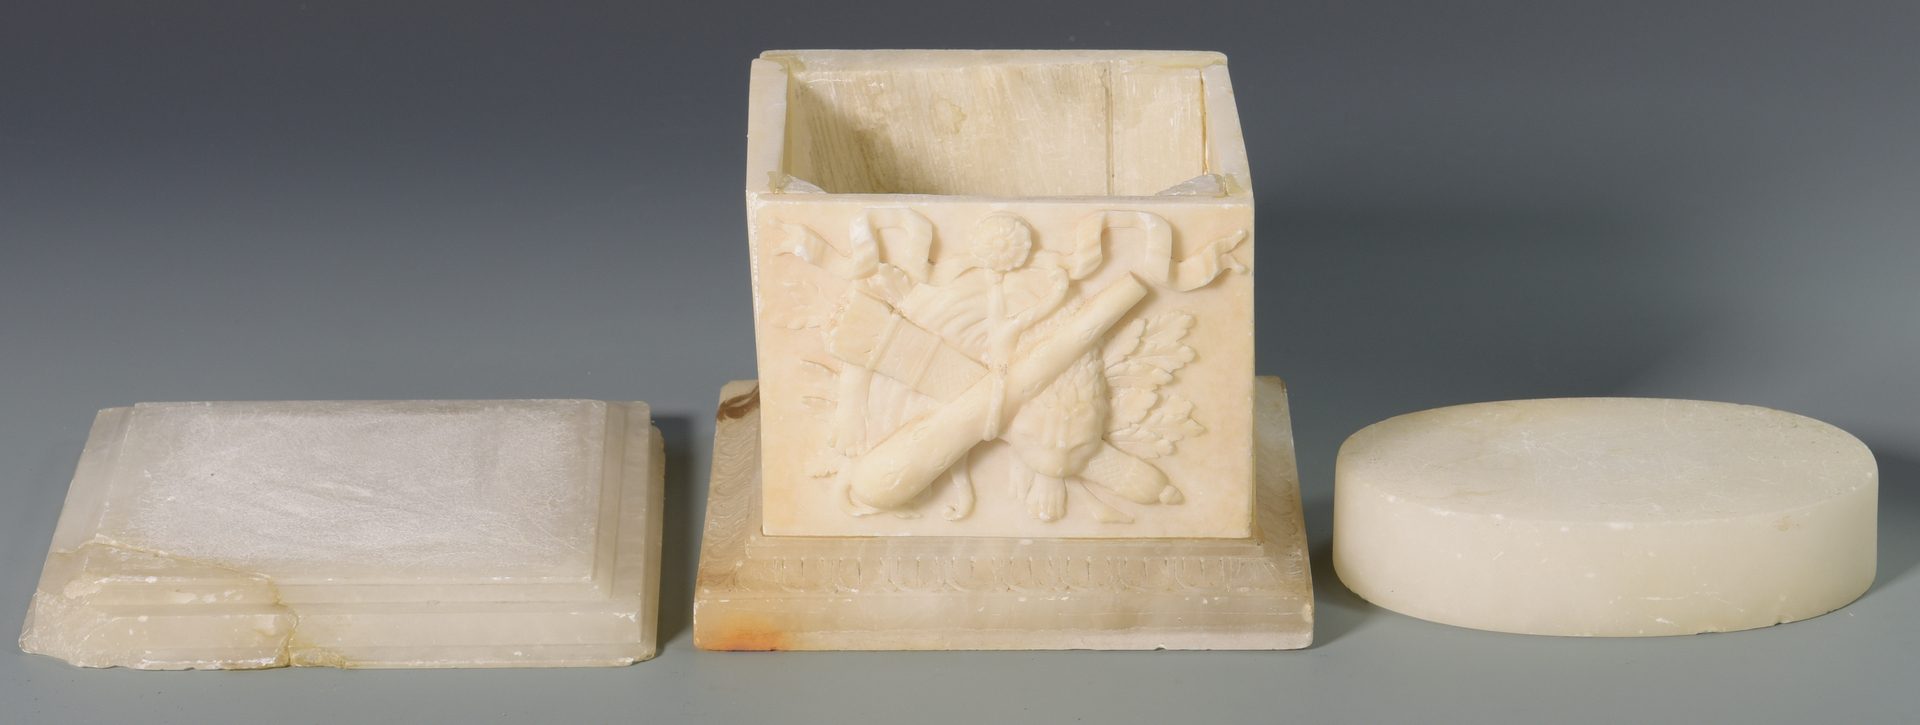 Lot 629: Hercules Figure & 2 Architectural Fragments